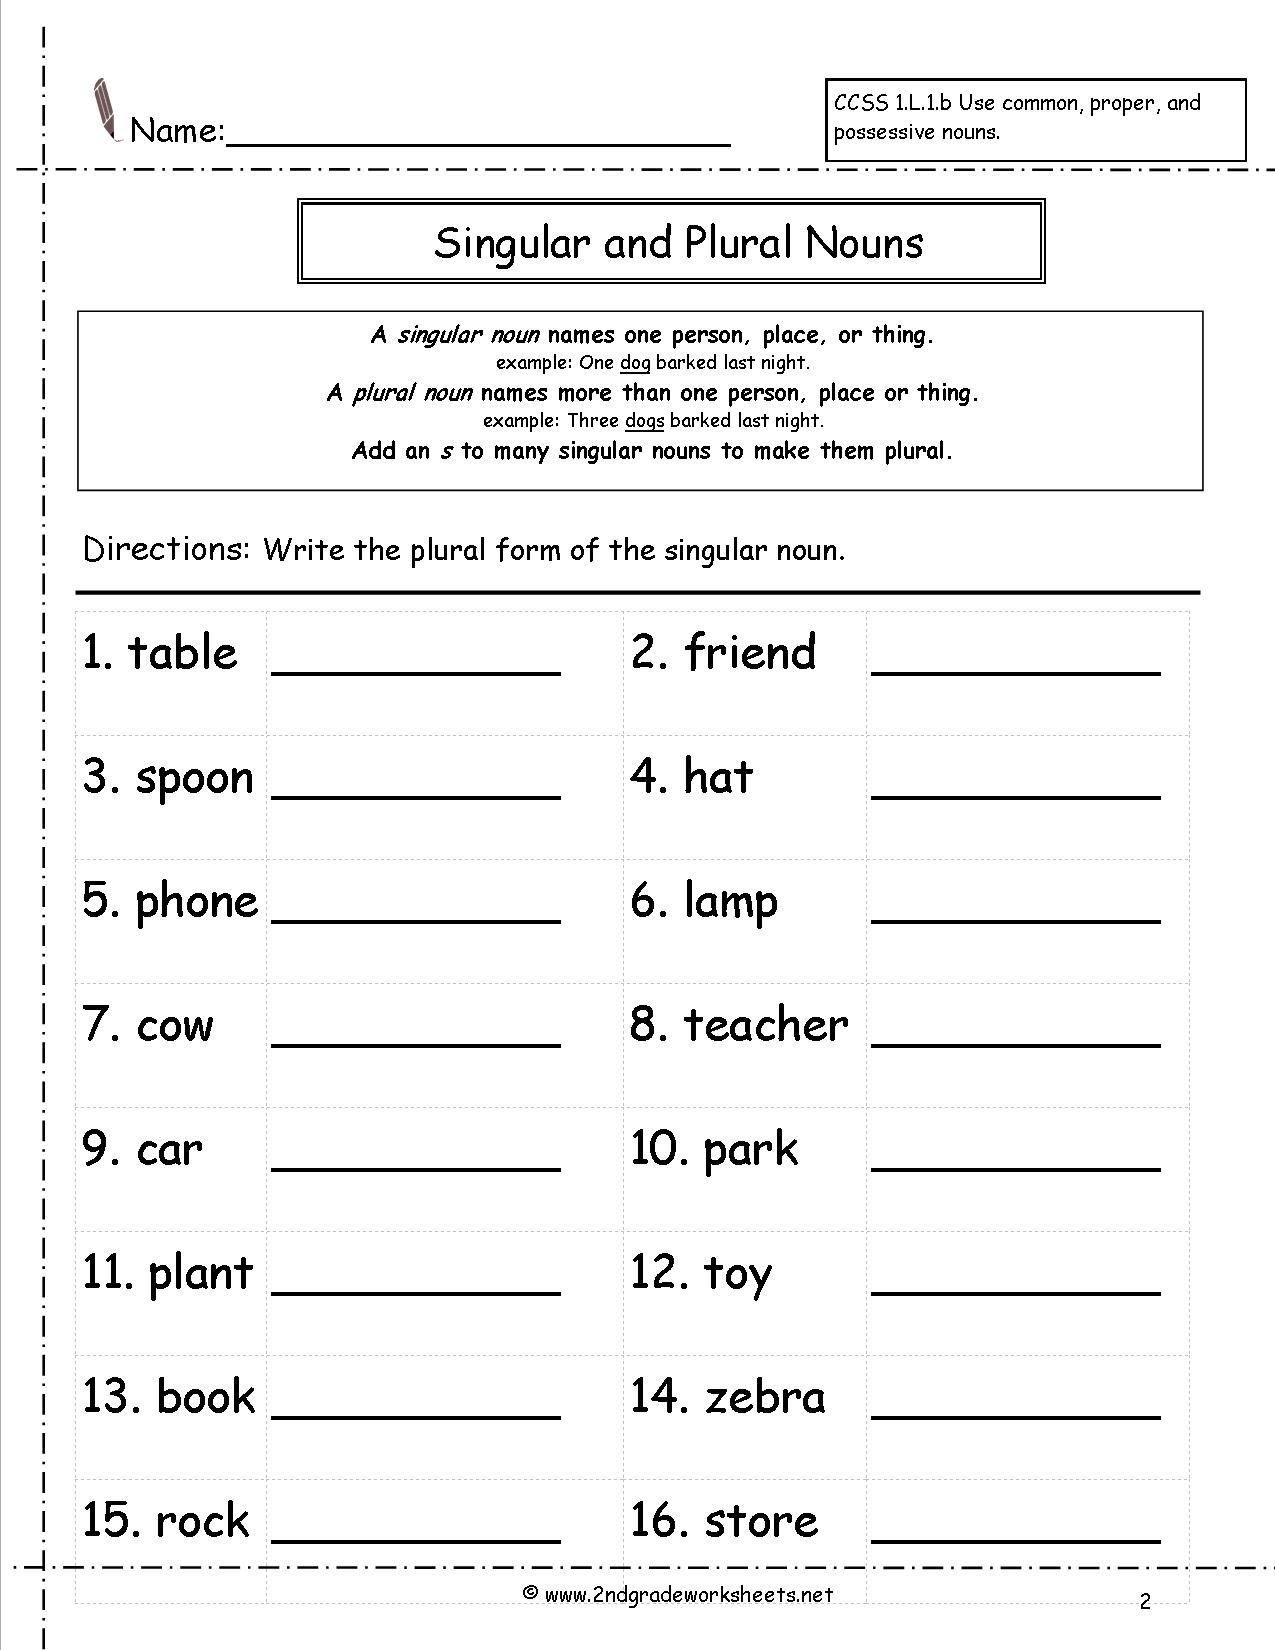 Singular And Plural Nouns Activities Worksheet